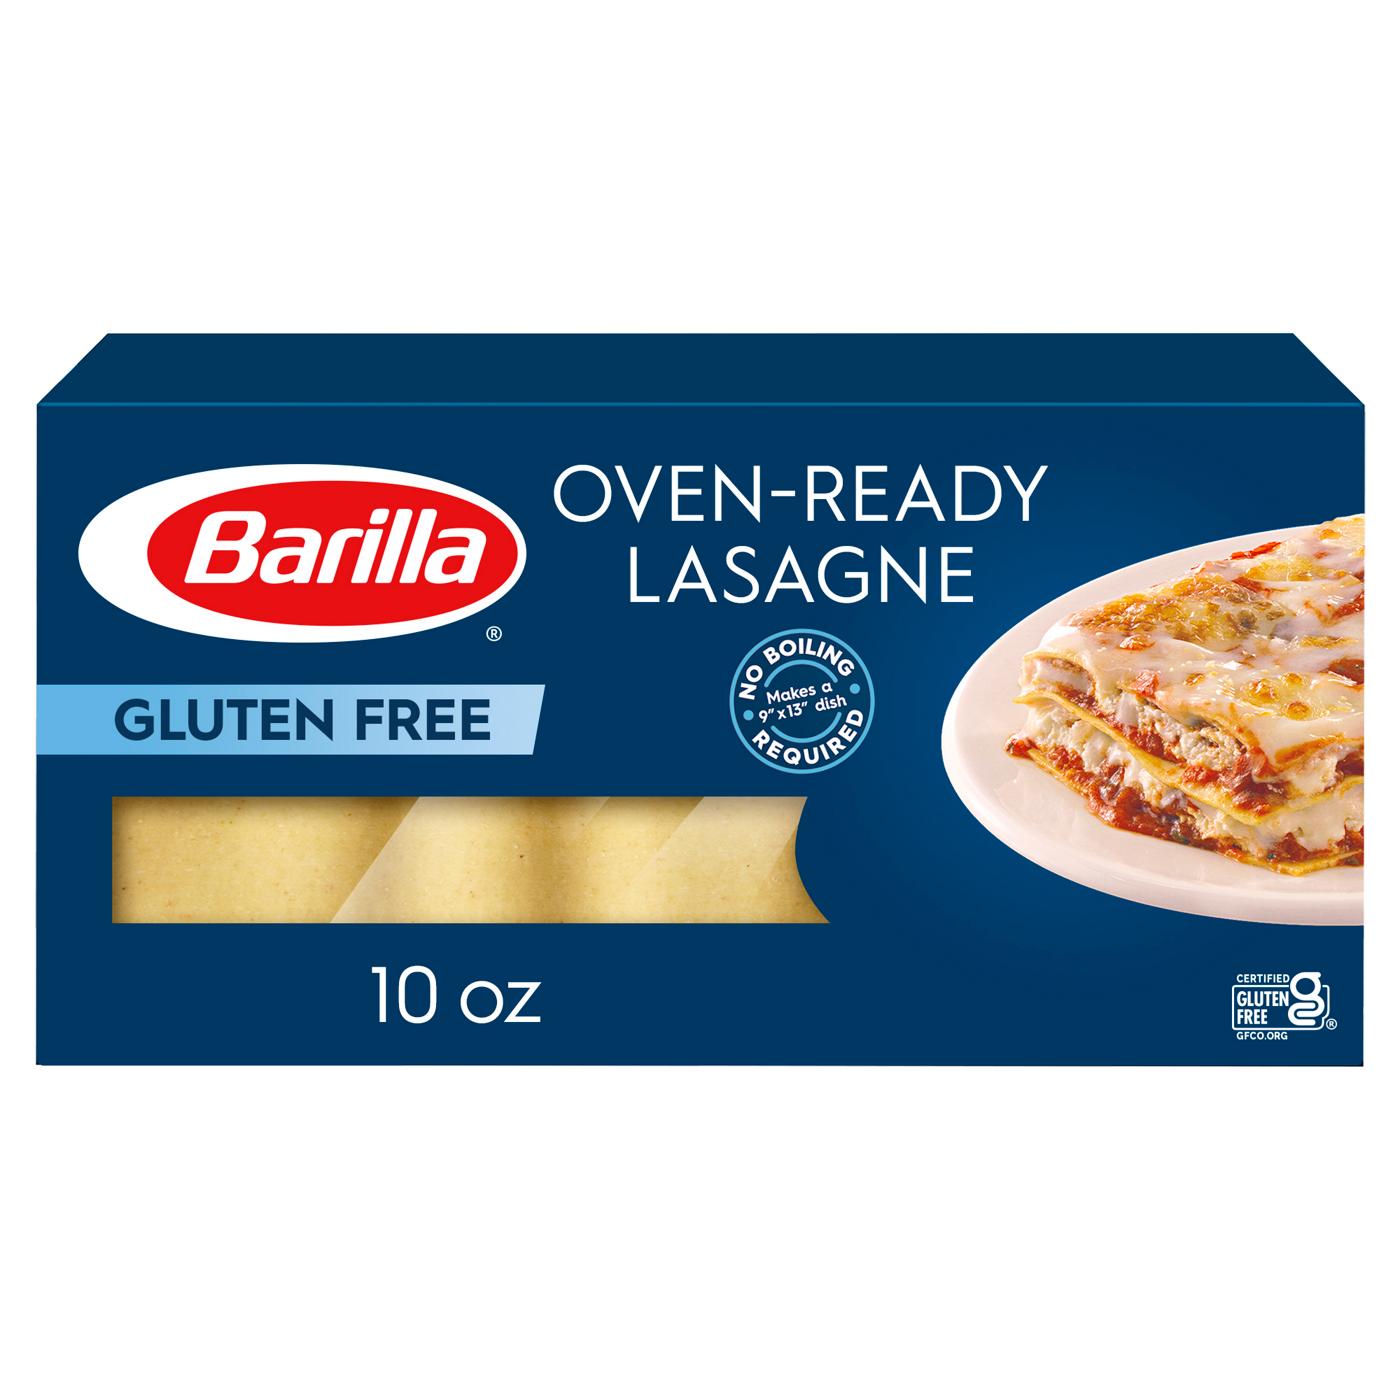 Barilla Gluten Free Oven-Ready Lasagne Pasta; image 1 of 7